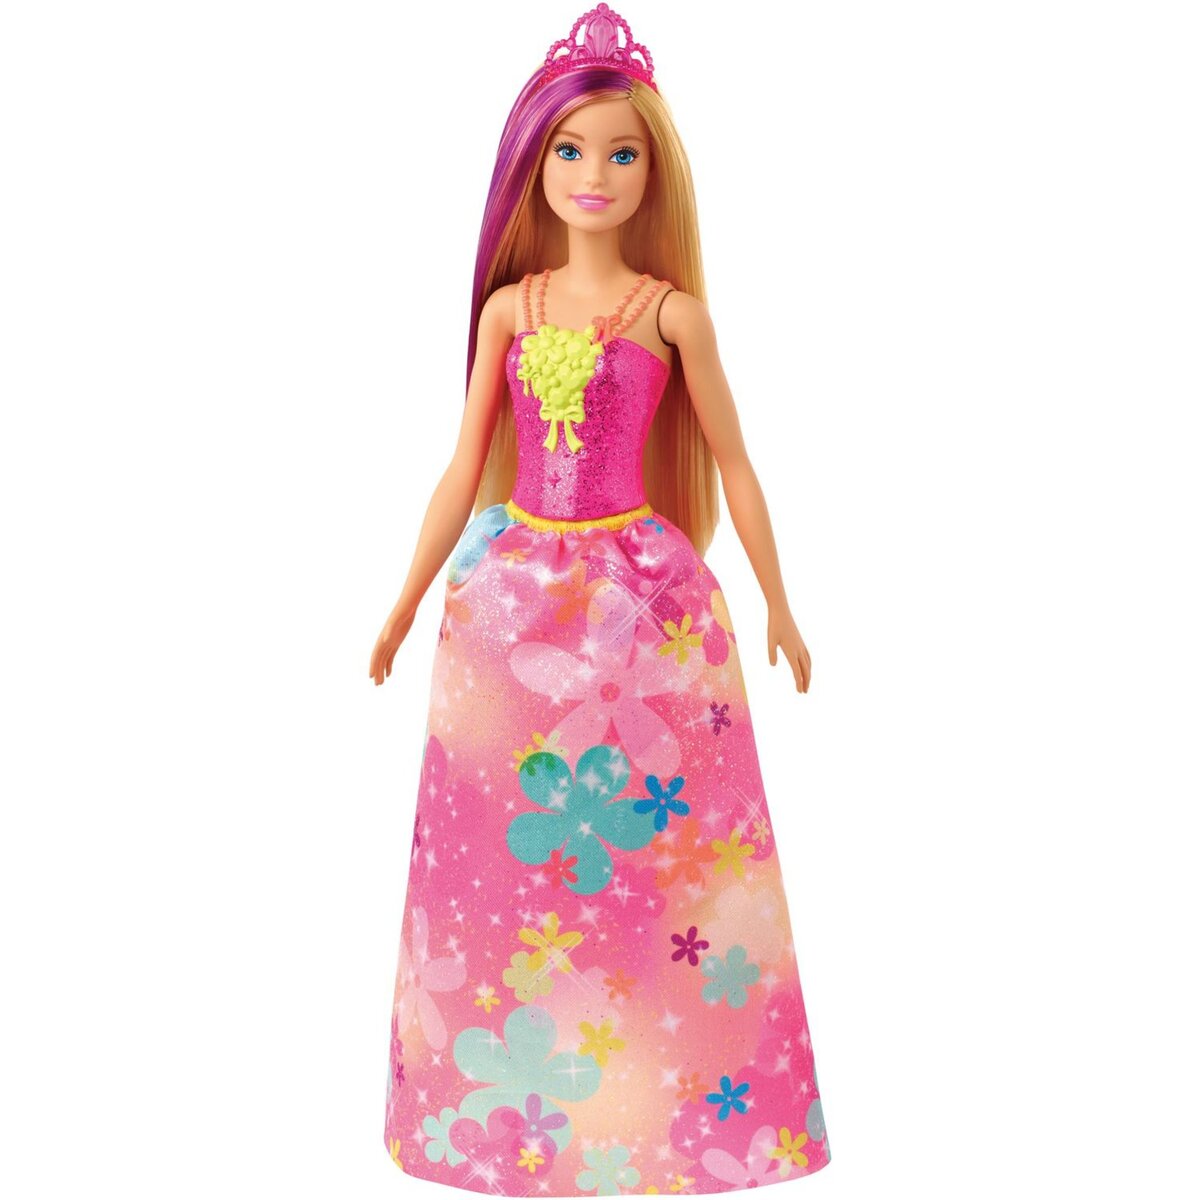 BARBIE Princesse Barbie Dreamtopia - cheveux blonds et roses